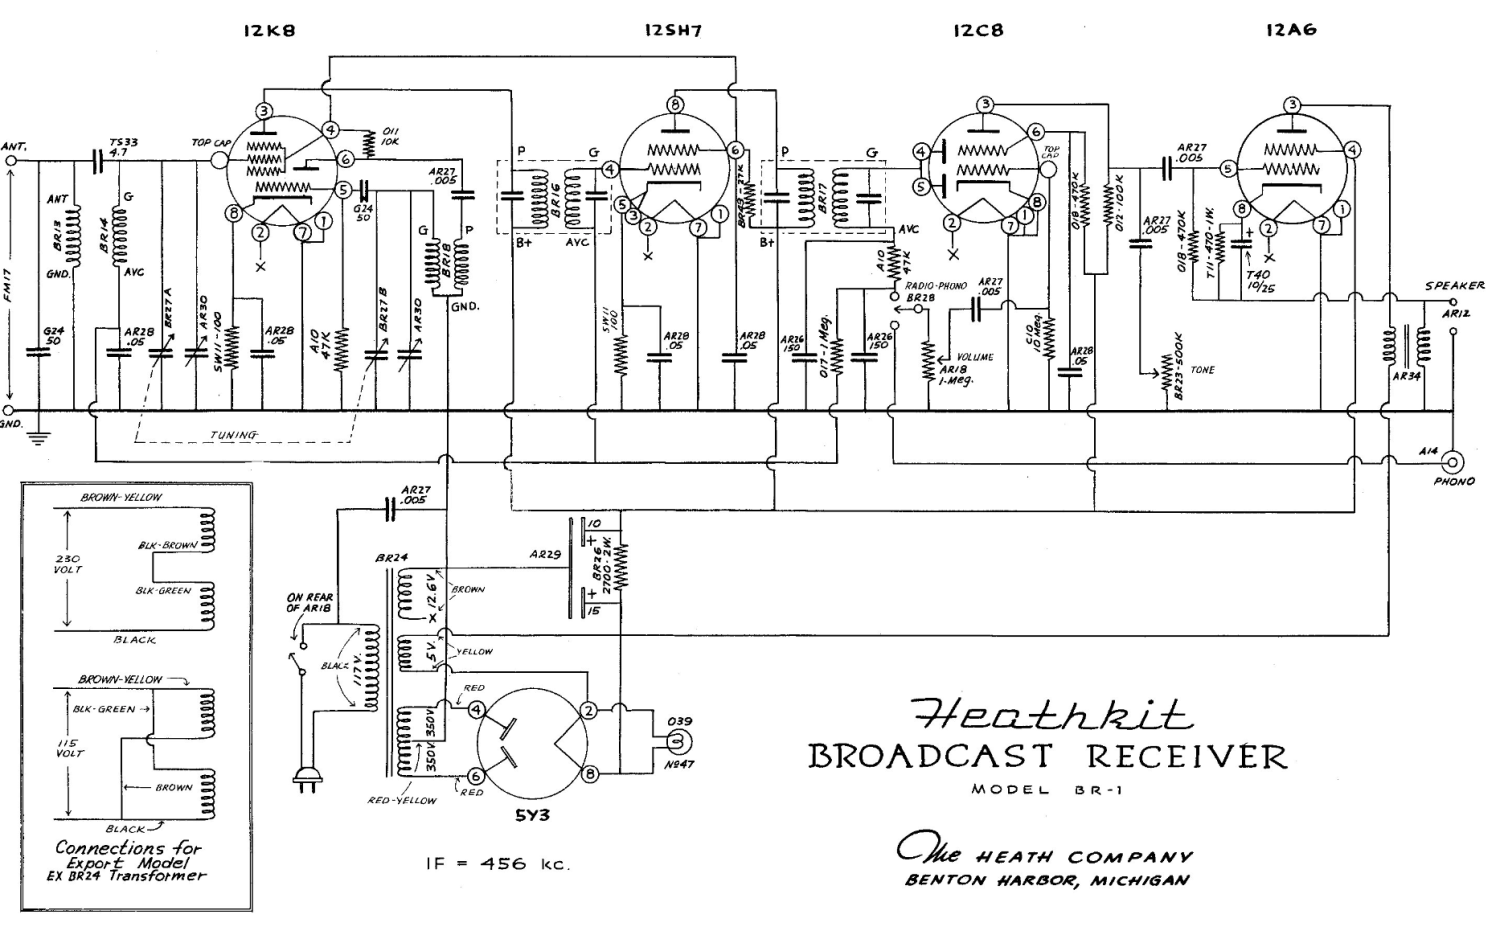 Heathkit BR-1 Broadcast Receiver - Schematic Diagram